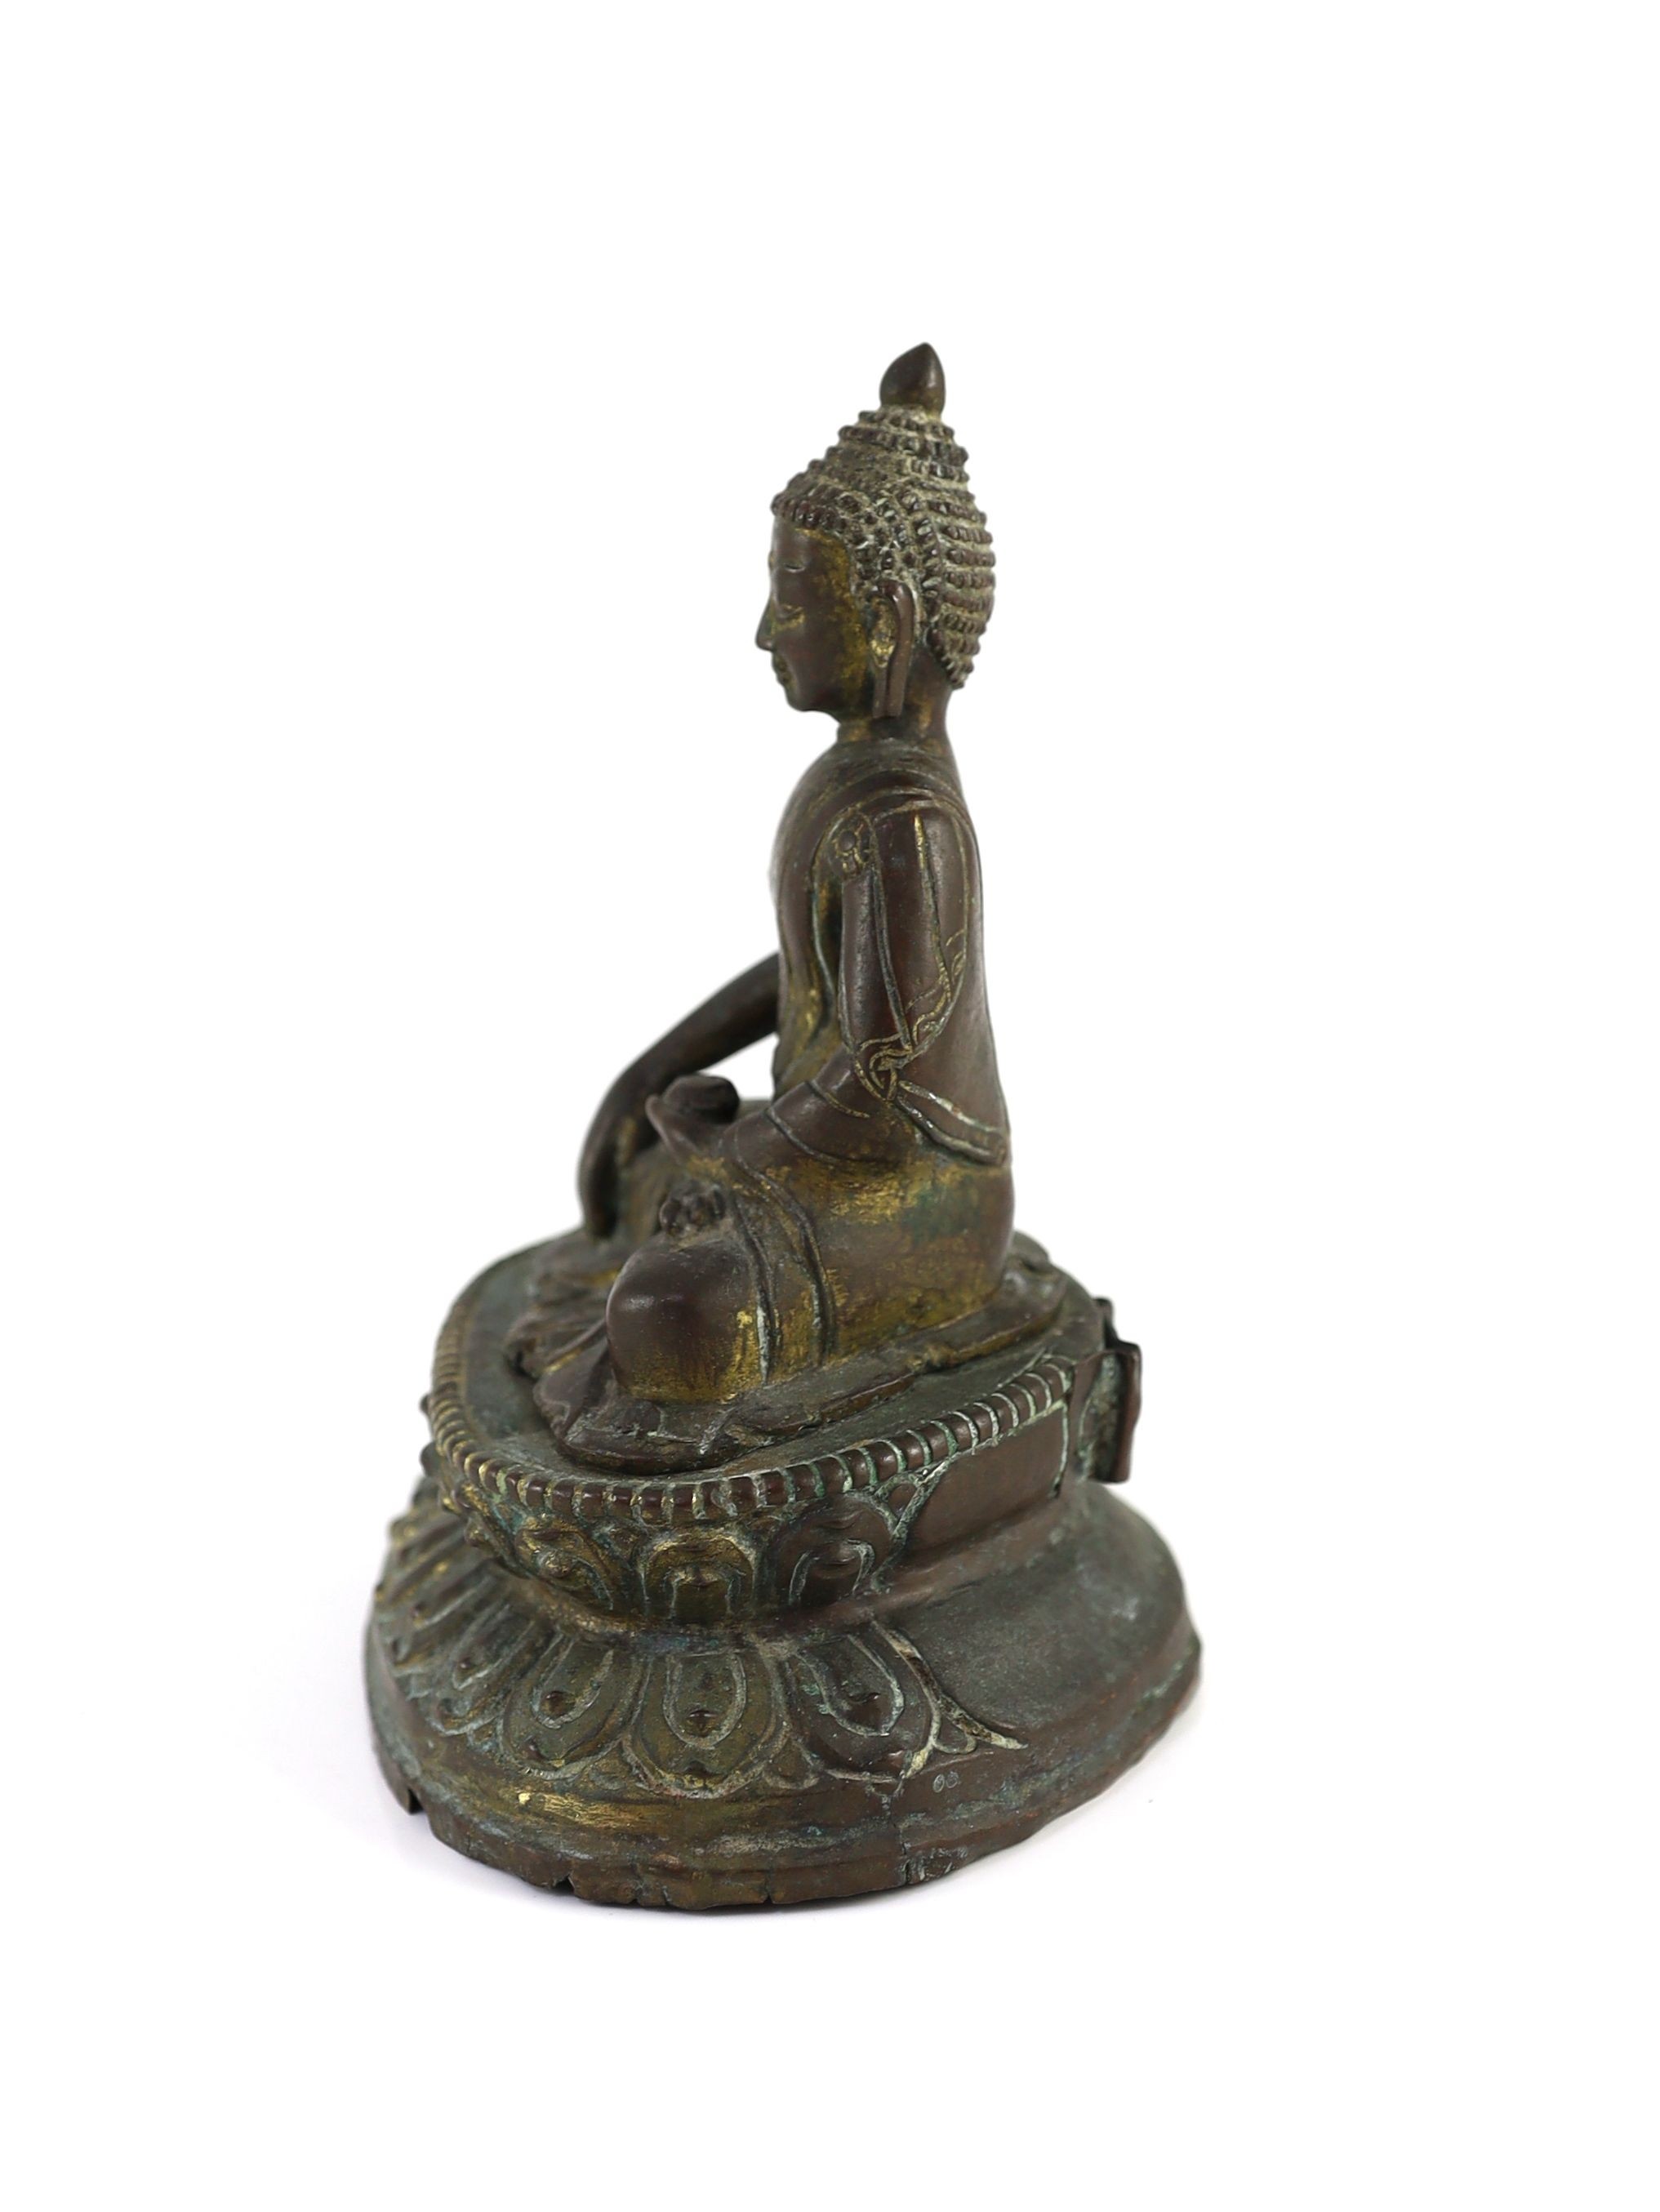 A Nepalese or Tibetan gilt copper alloy figure of Buddha Shakyamuni, 18th/19th century, 15cm high